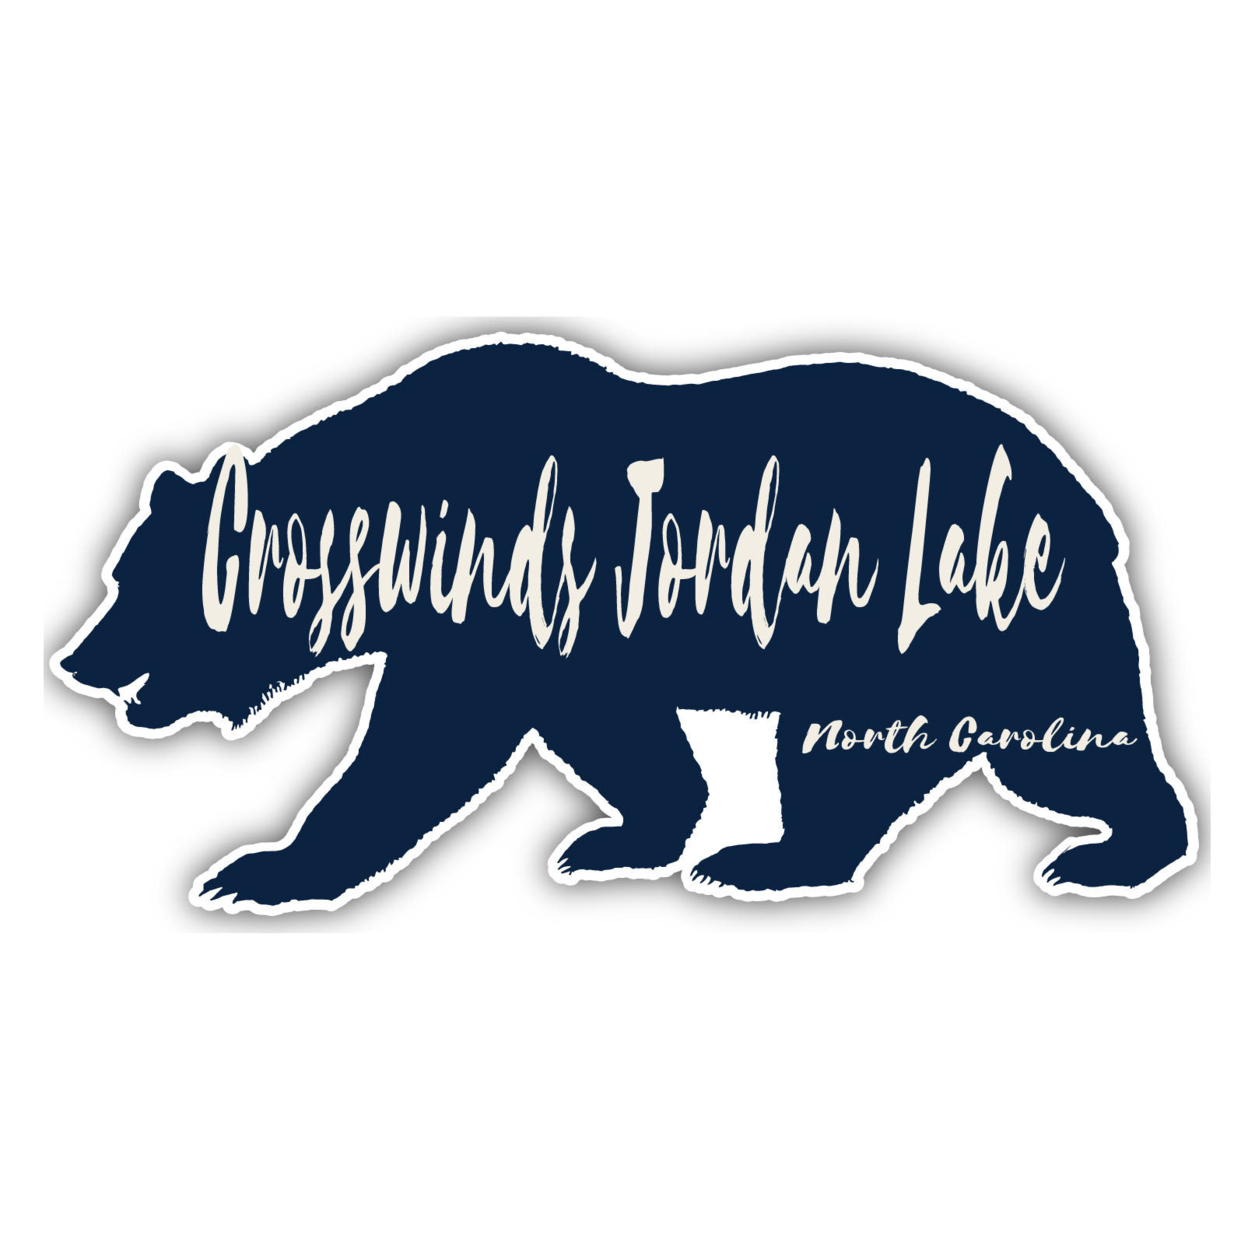 Crosswinds Jordan Lake North Carolina Souvenir Decorative Stickers (Choose Theme And Size) - 4-Pack, 10-Inch, Bear